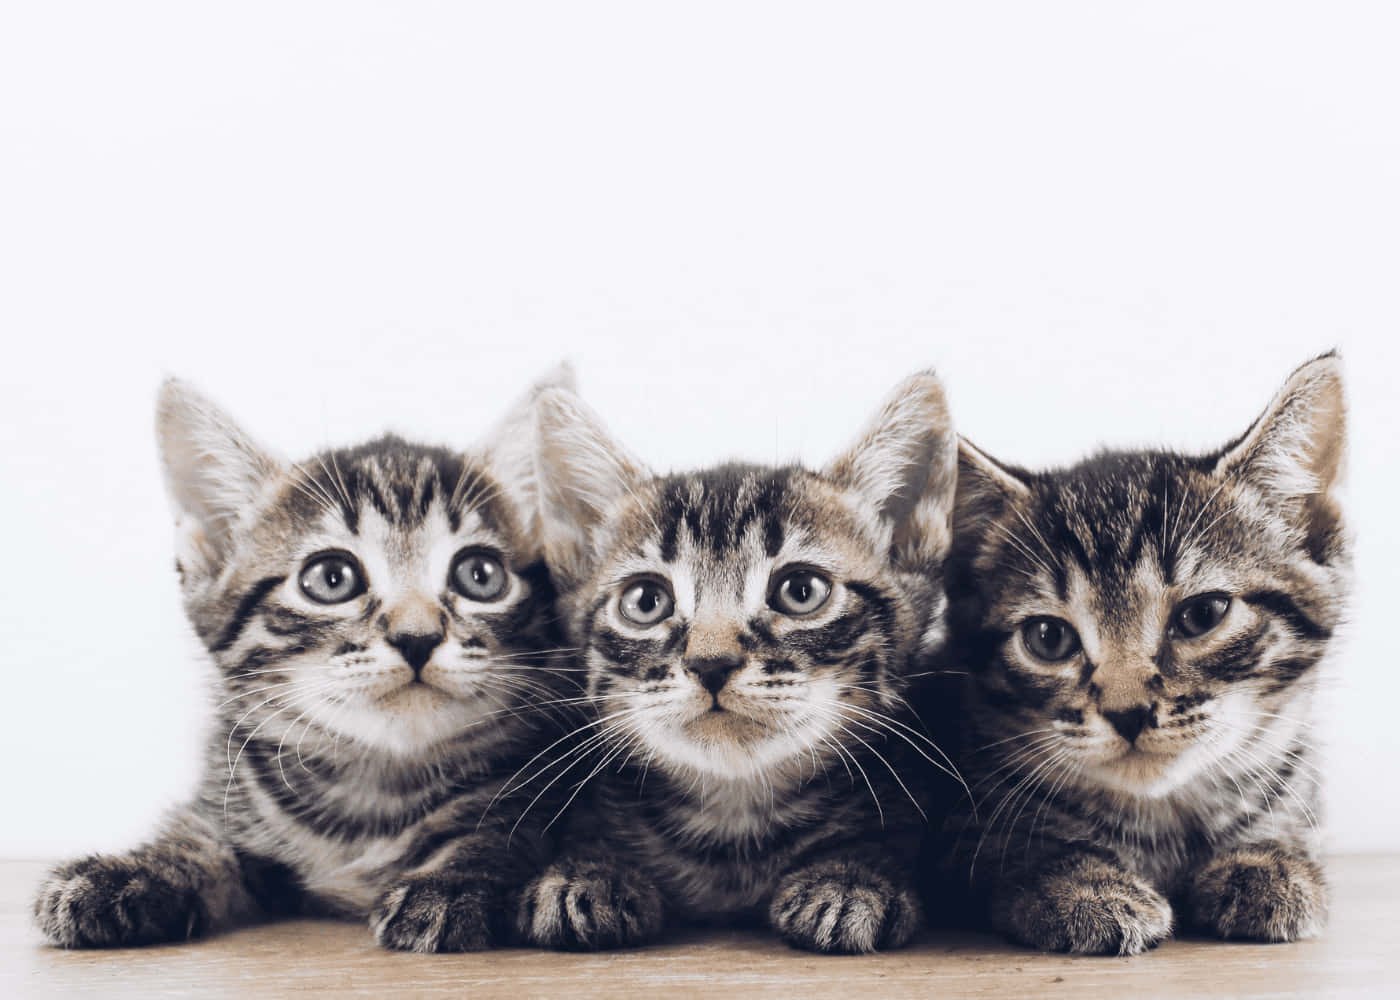 Three Kittens Looking At The Camera